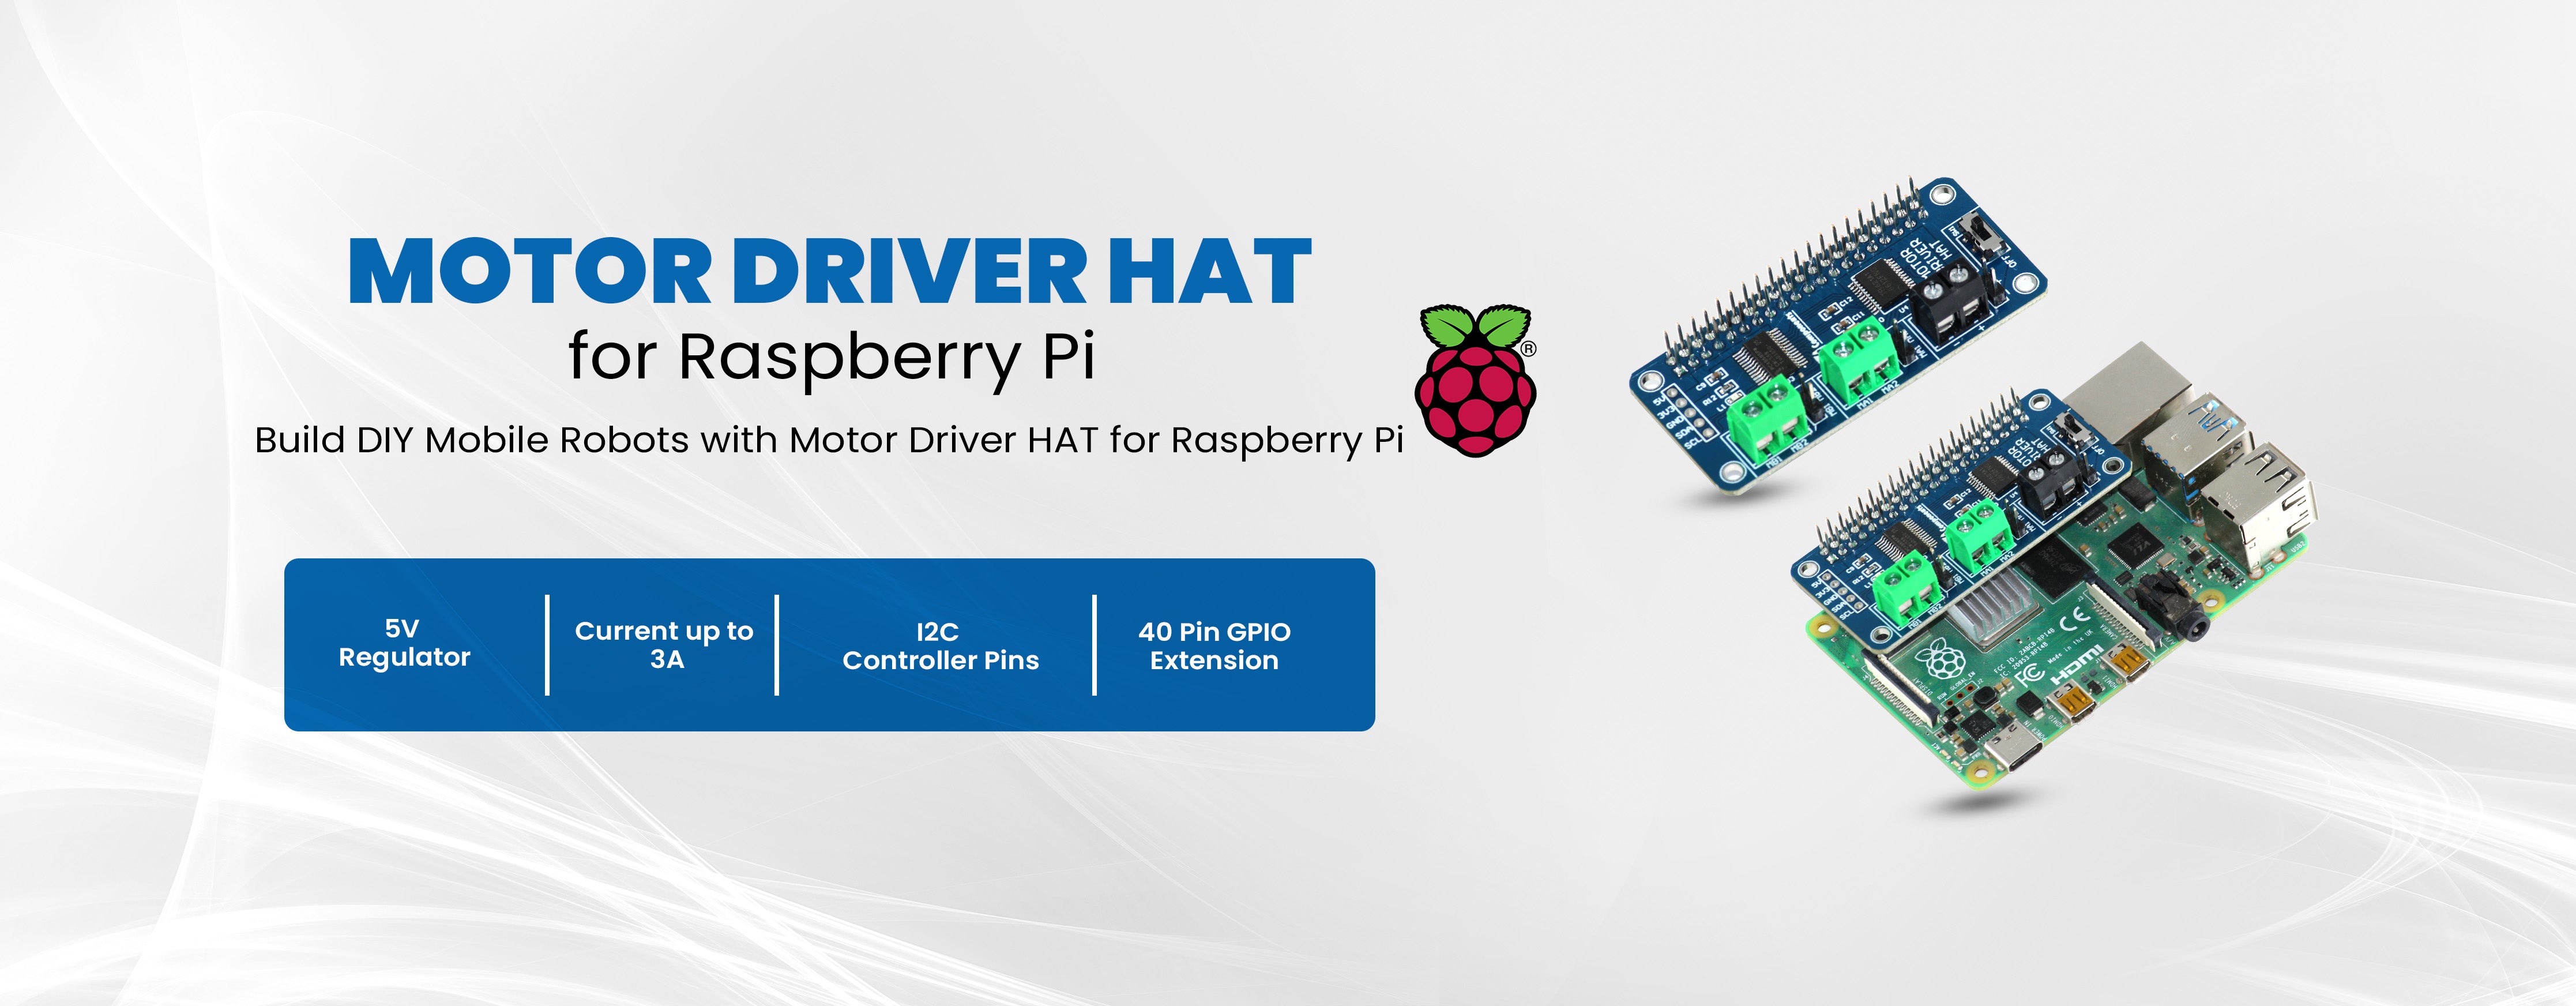 Motor Driver HAT For Raspberry Pi